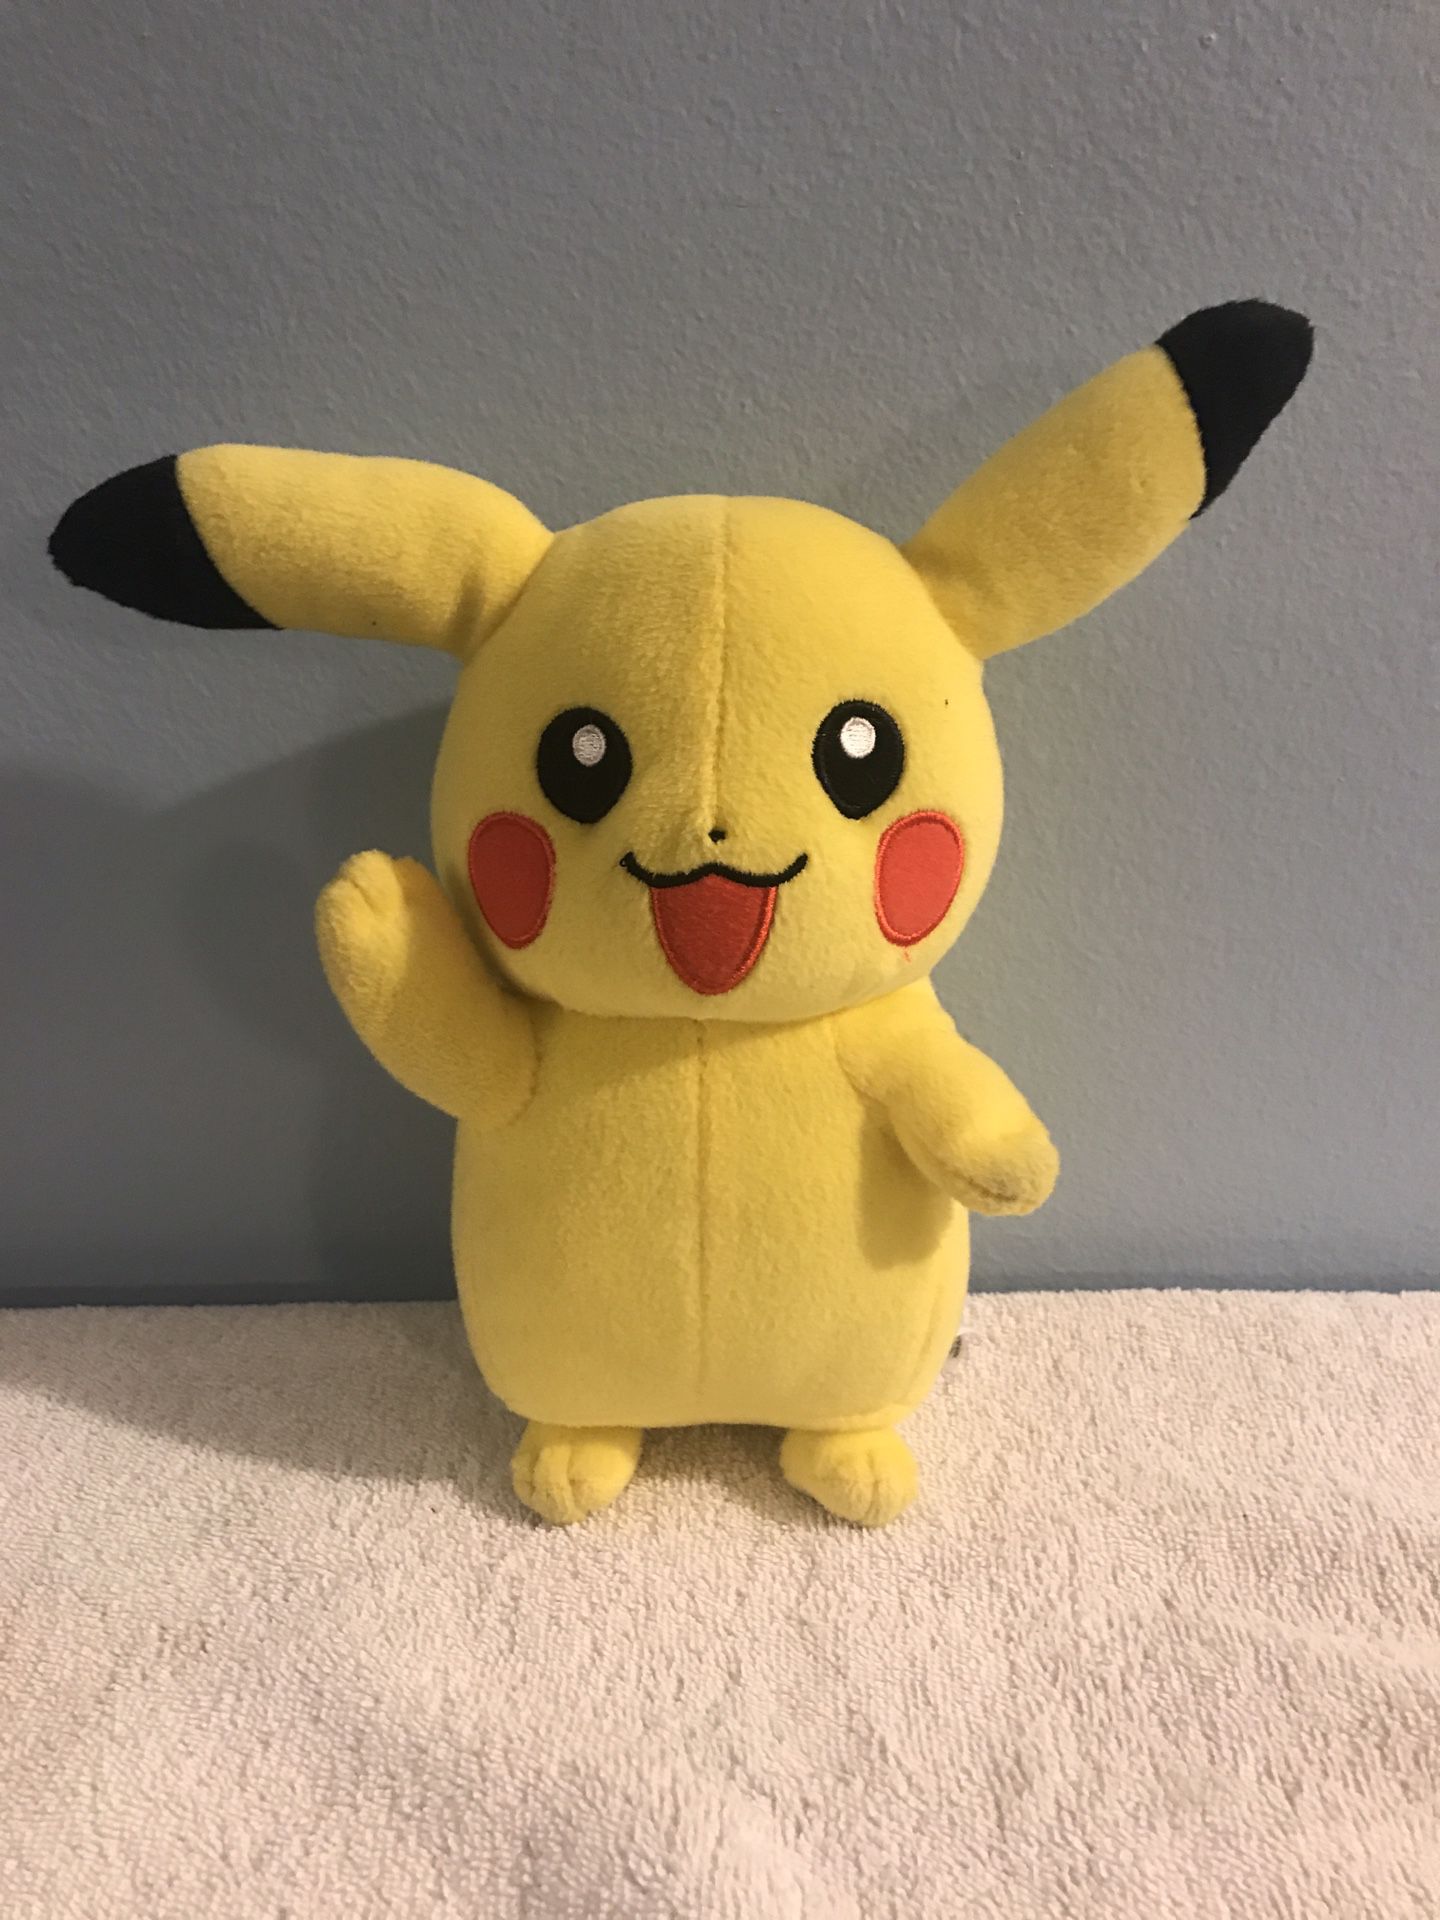 Pikachu 7 inch plush by Tomy Pokemon